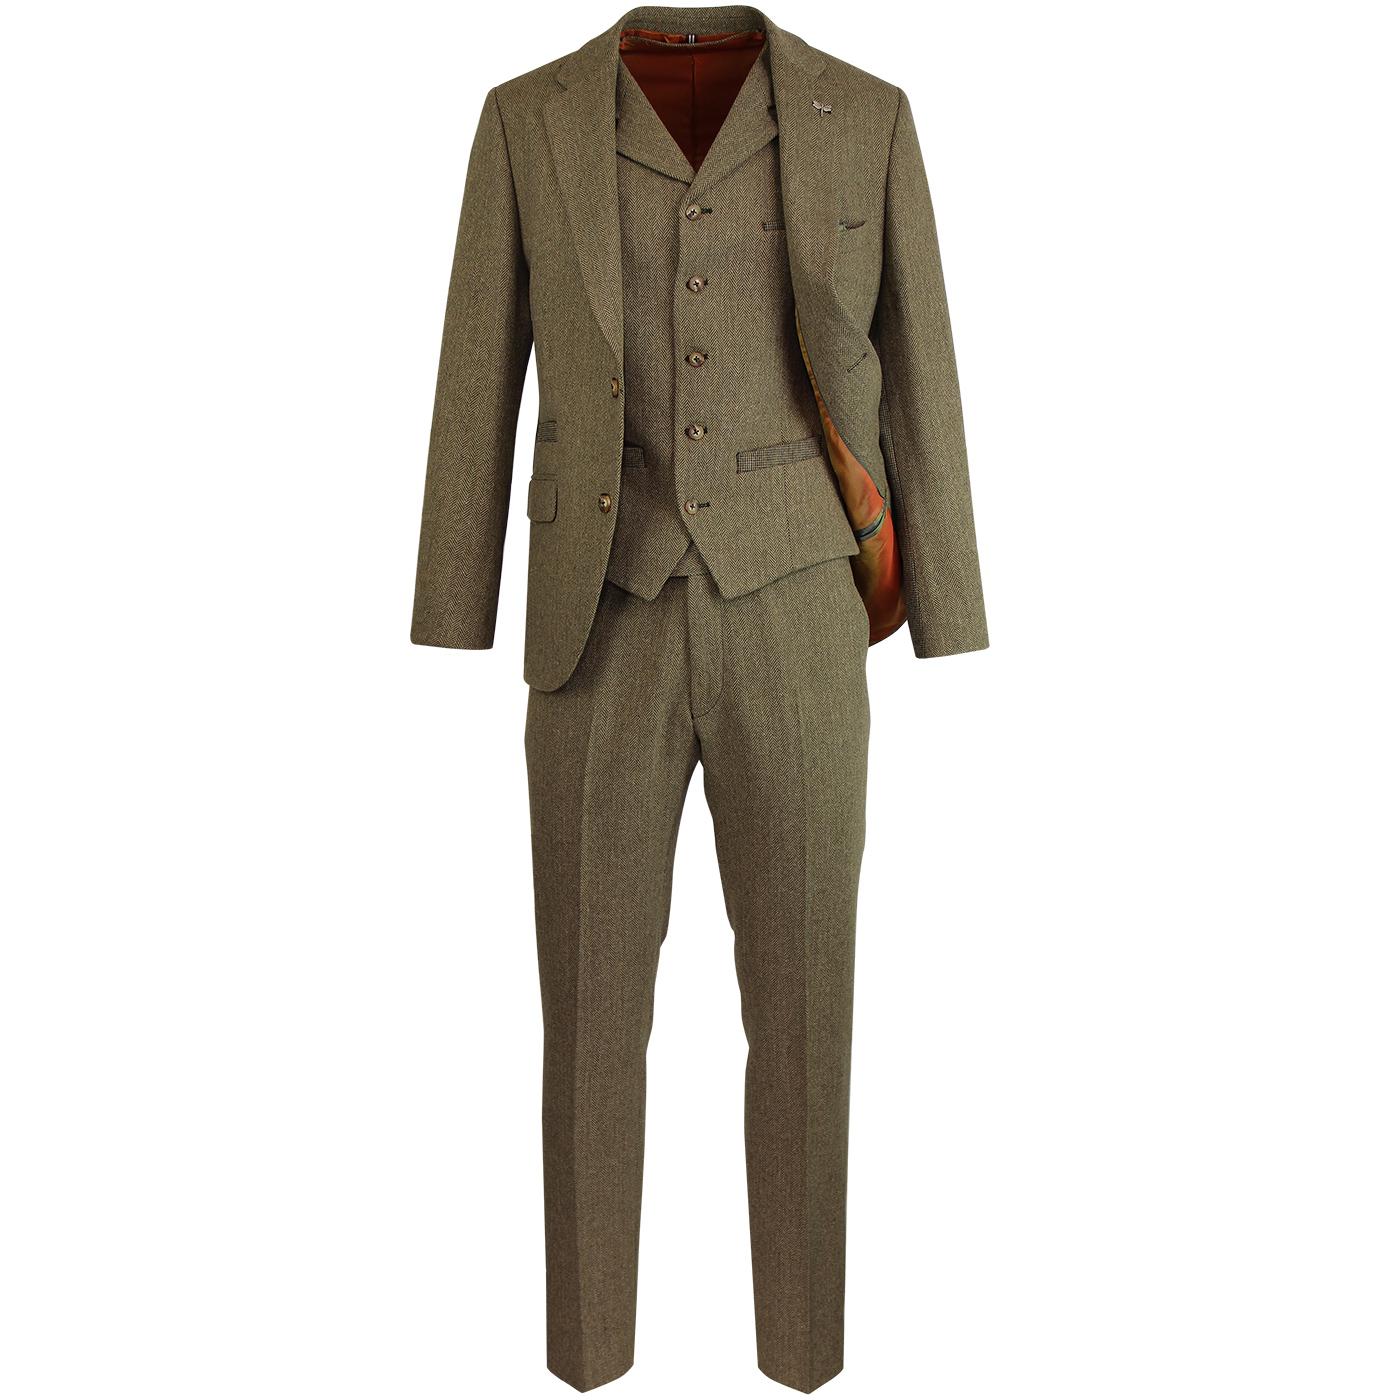 Towergate GIBSON LONDON Mod Herringbone Retro Suit